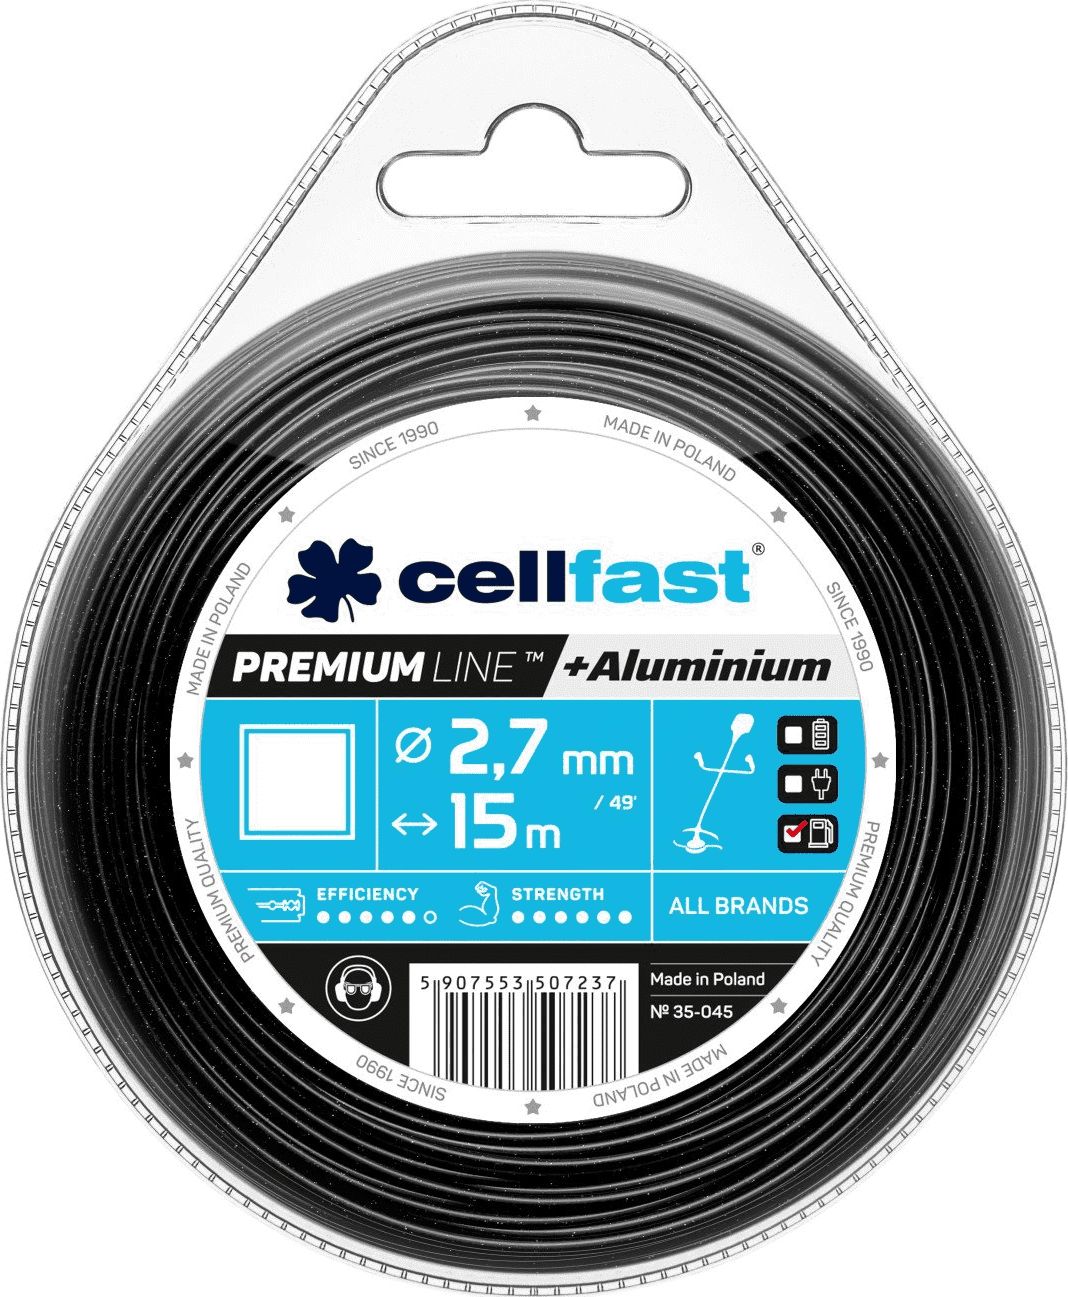 Cellfast zylka tnaca 2,7x15m premium (C35-045) 35-045 (5907553507237) Zāles pļāvējs - Trimmeris